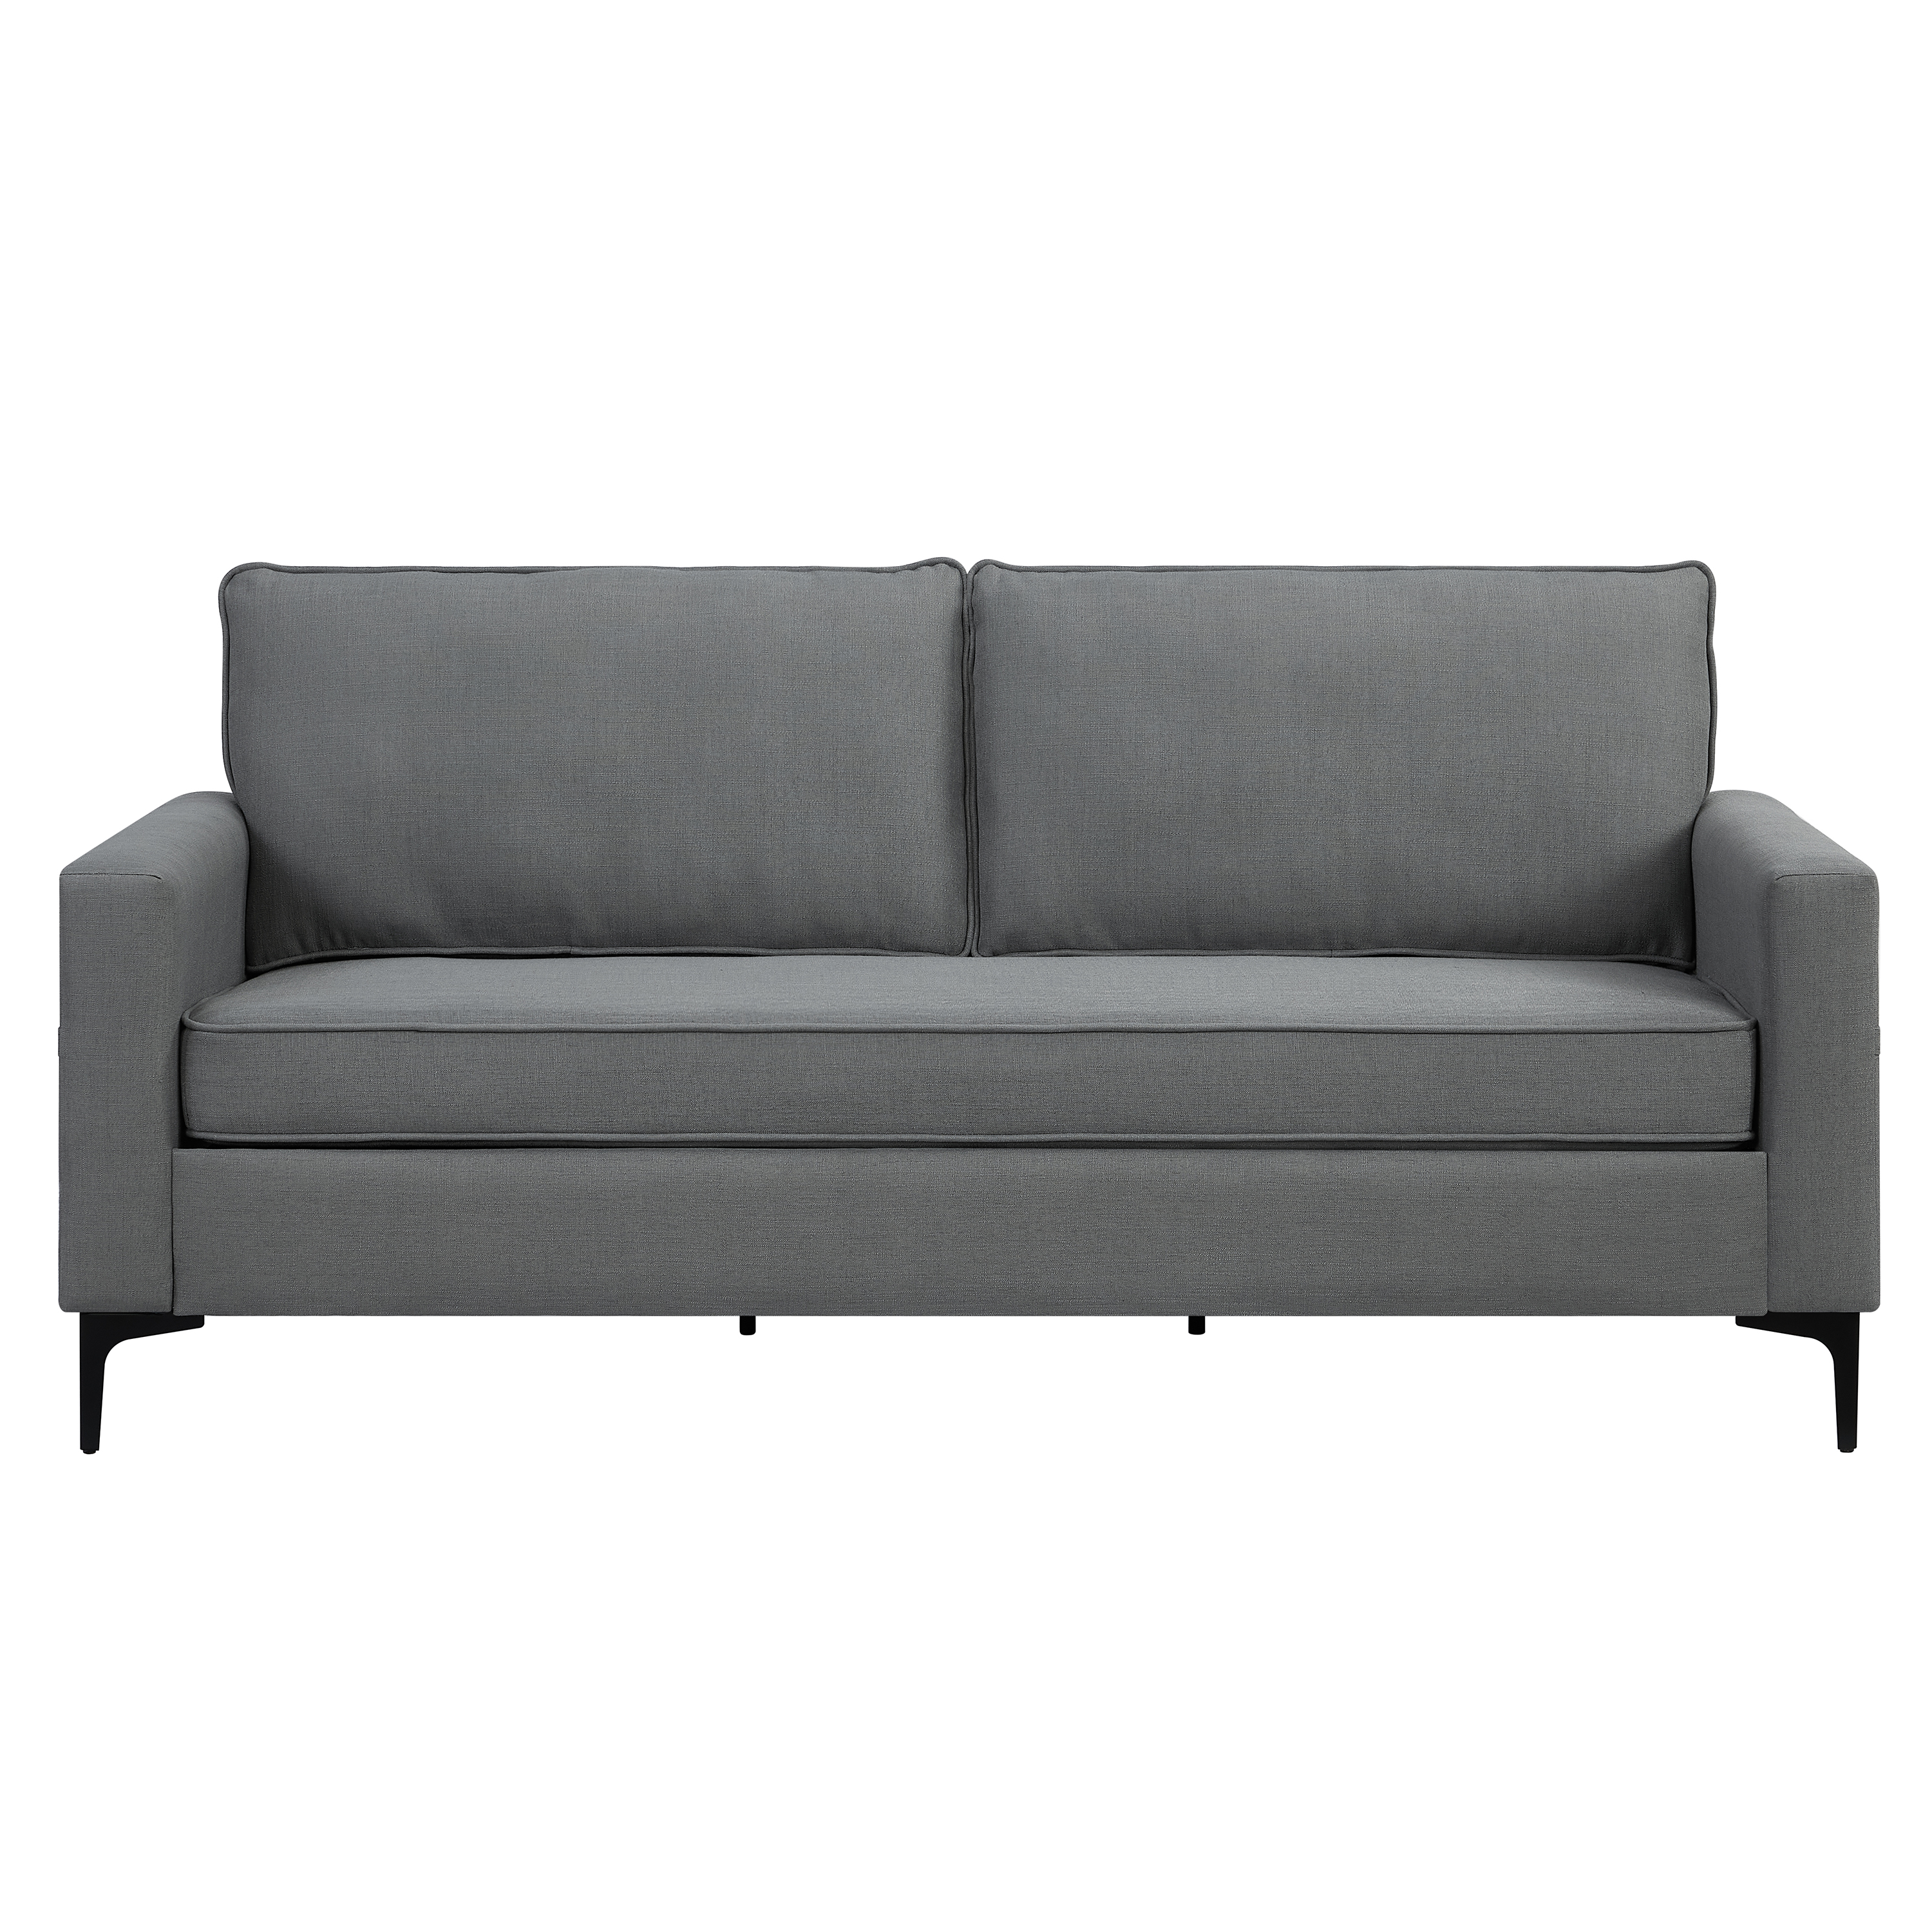 Bellarose Upholstered Sofa